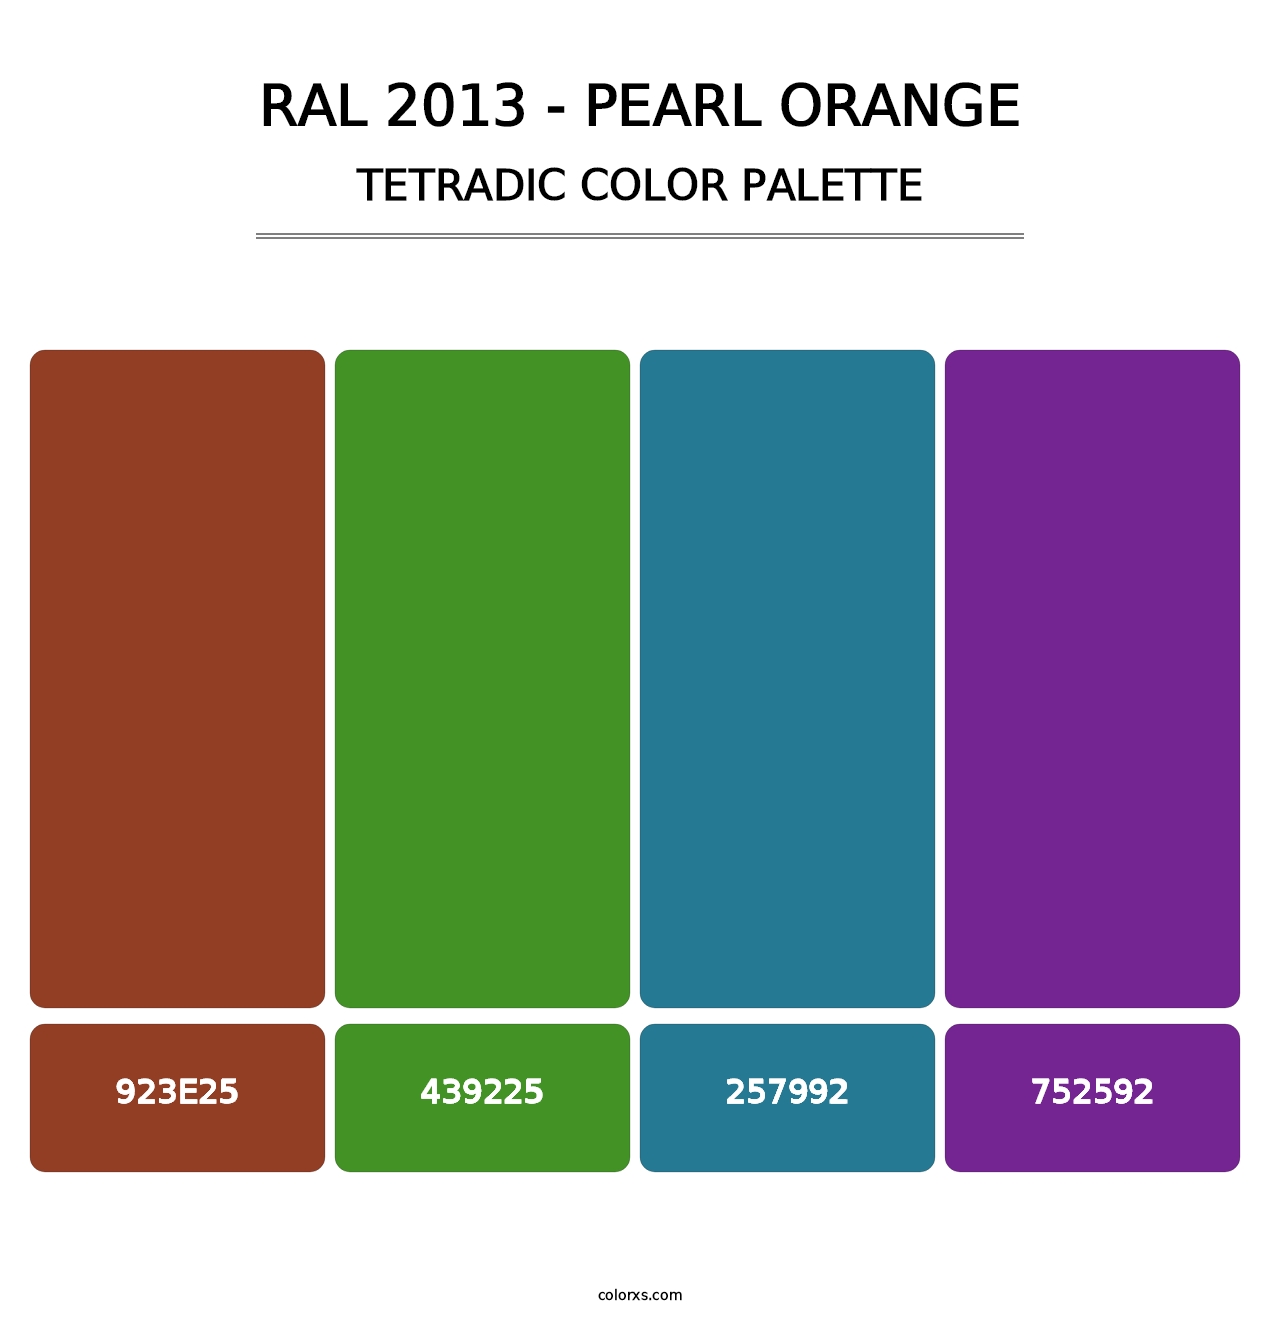 RAL 2013 - Pearl Orange - Tetradic Color Palette